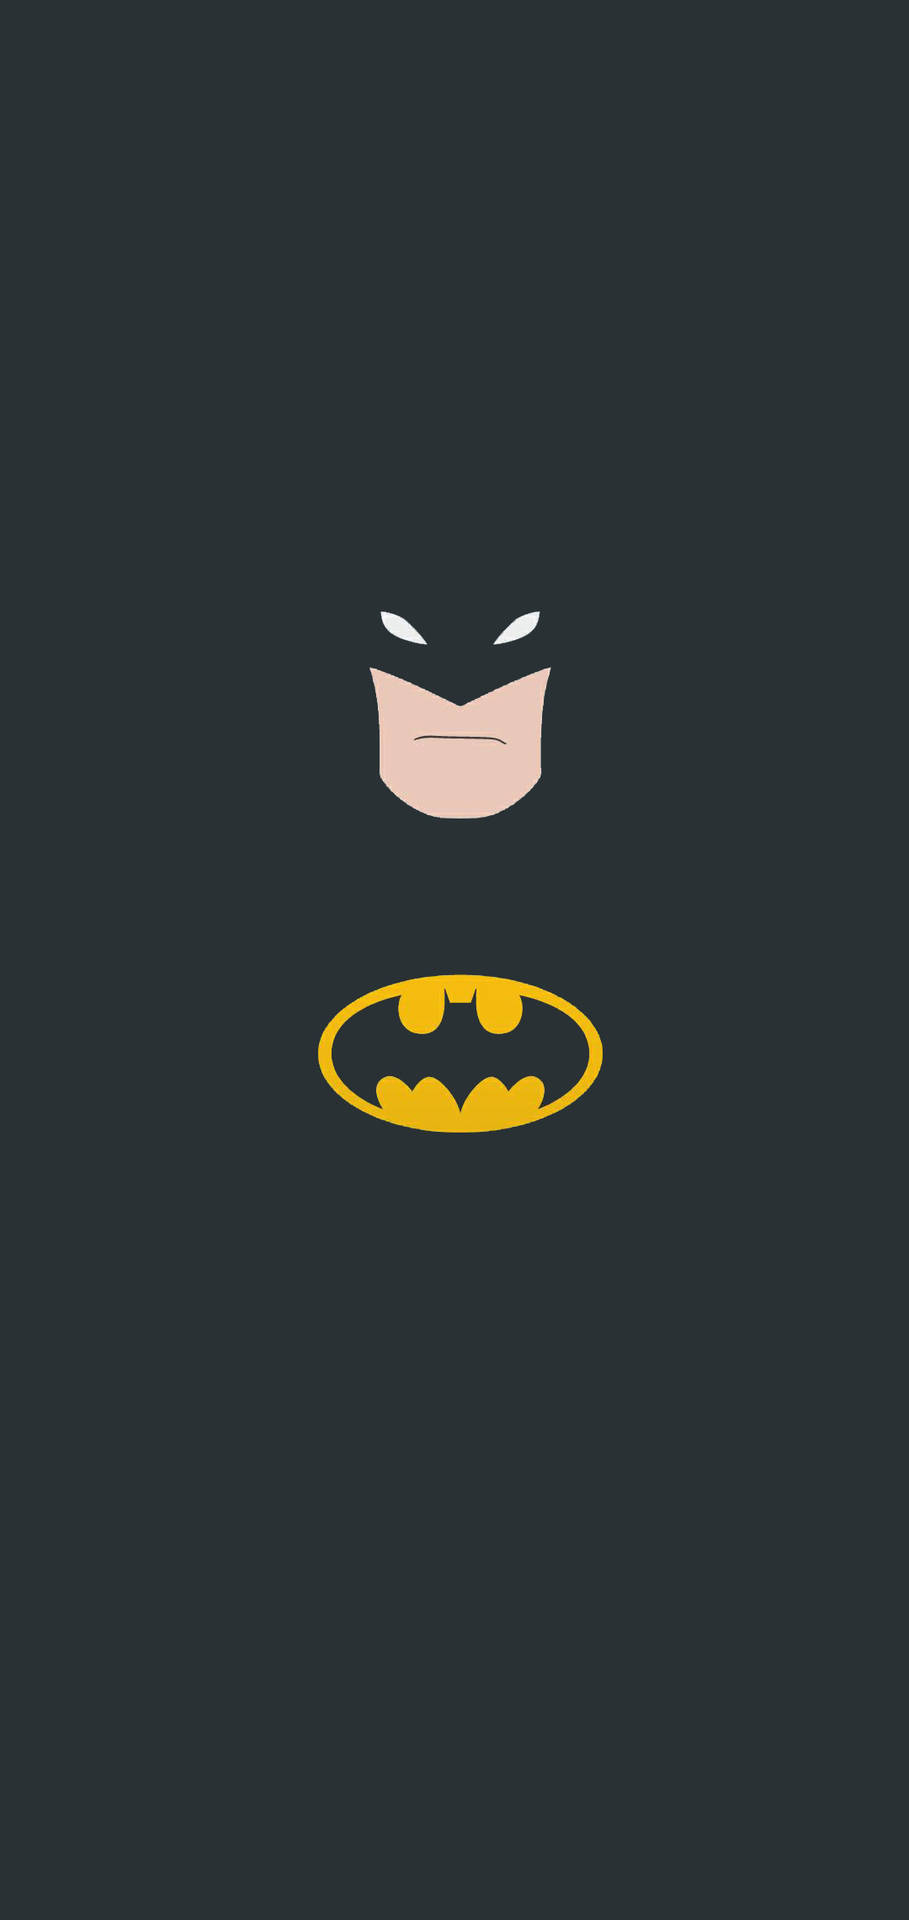 Batman Minimalist Iphone Background